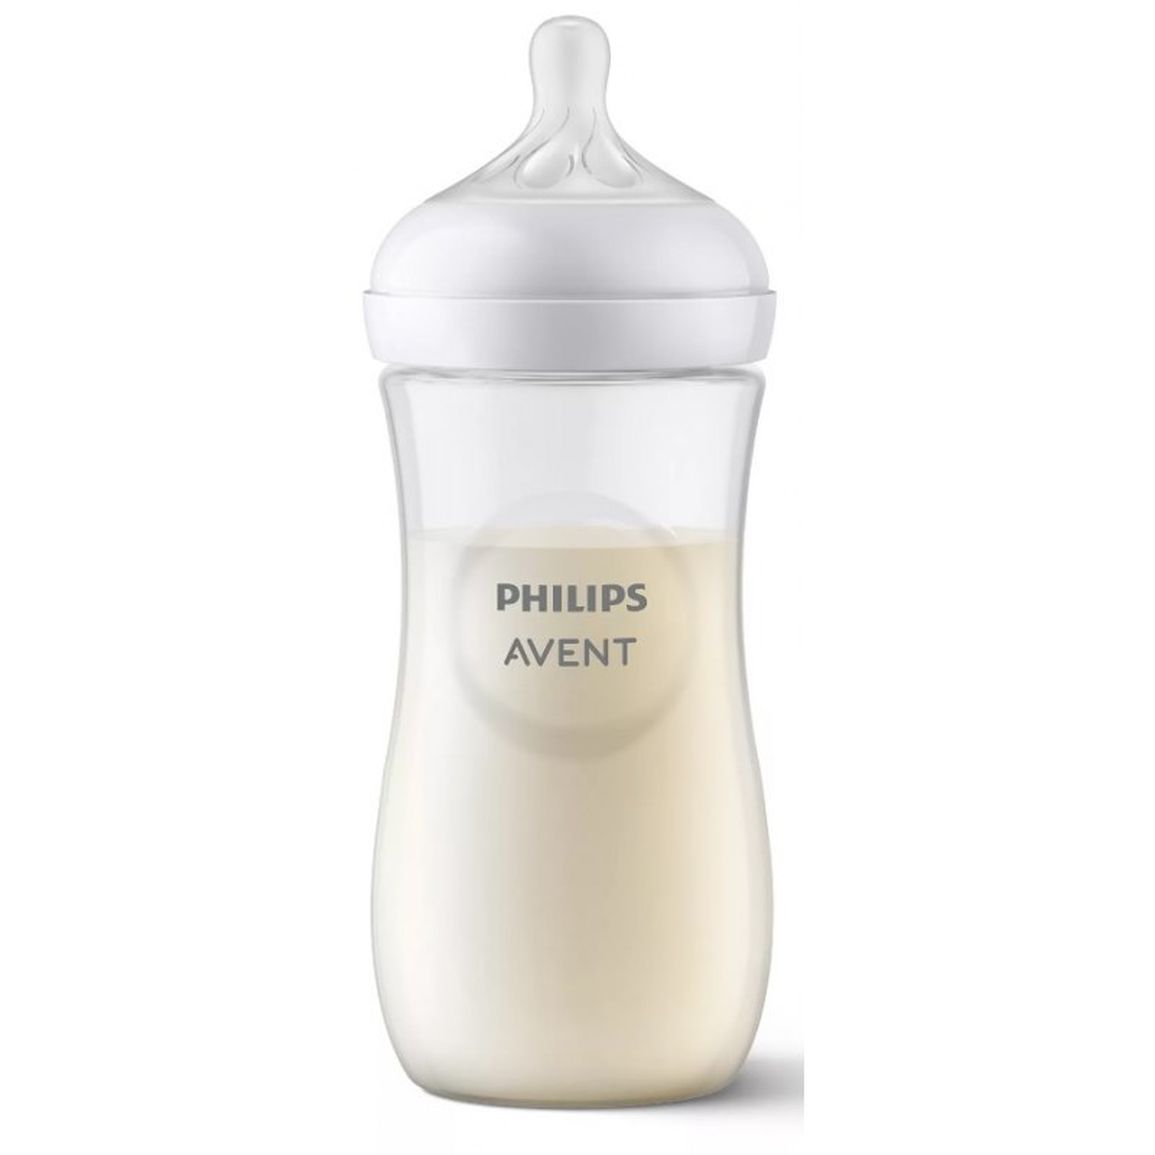 Philips Avent Responsive Bottle Natural  260ml